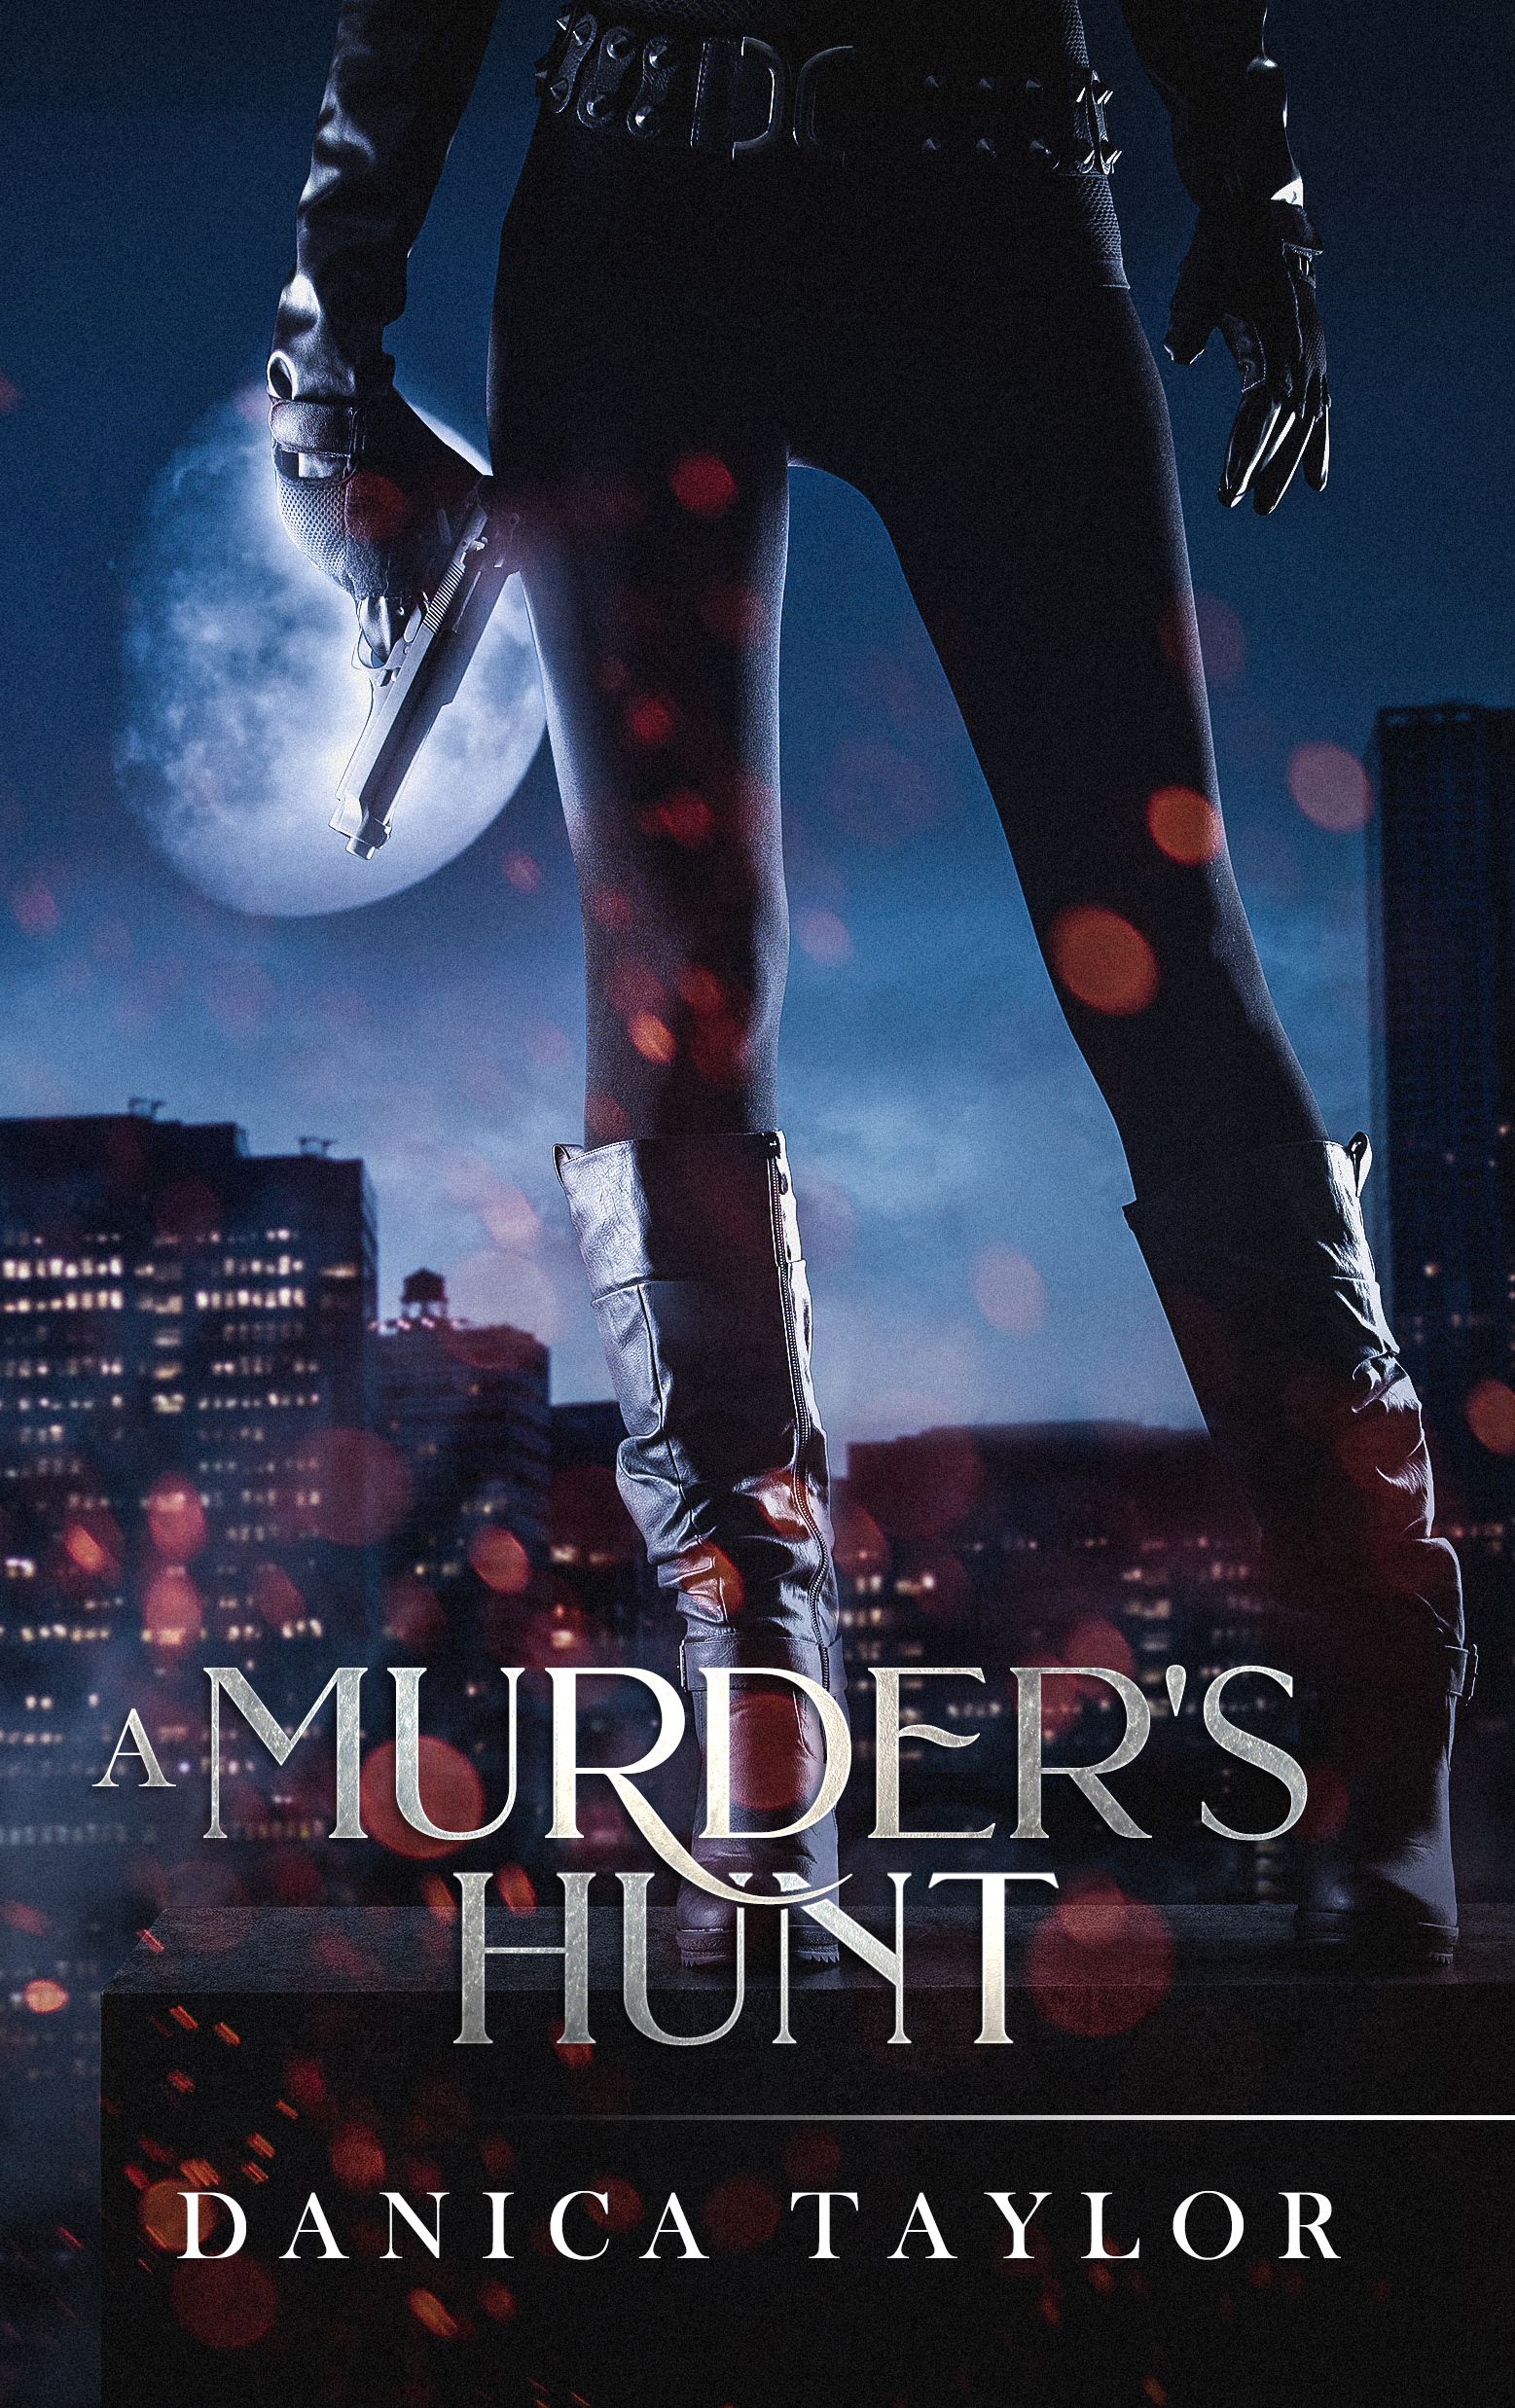 Danica Taylor: A murder's hunt (2018)